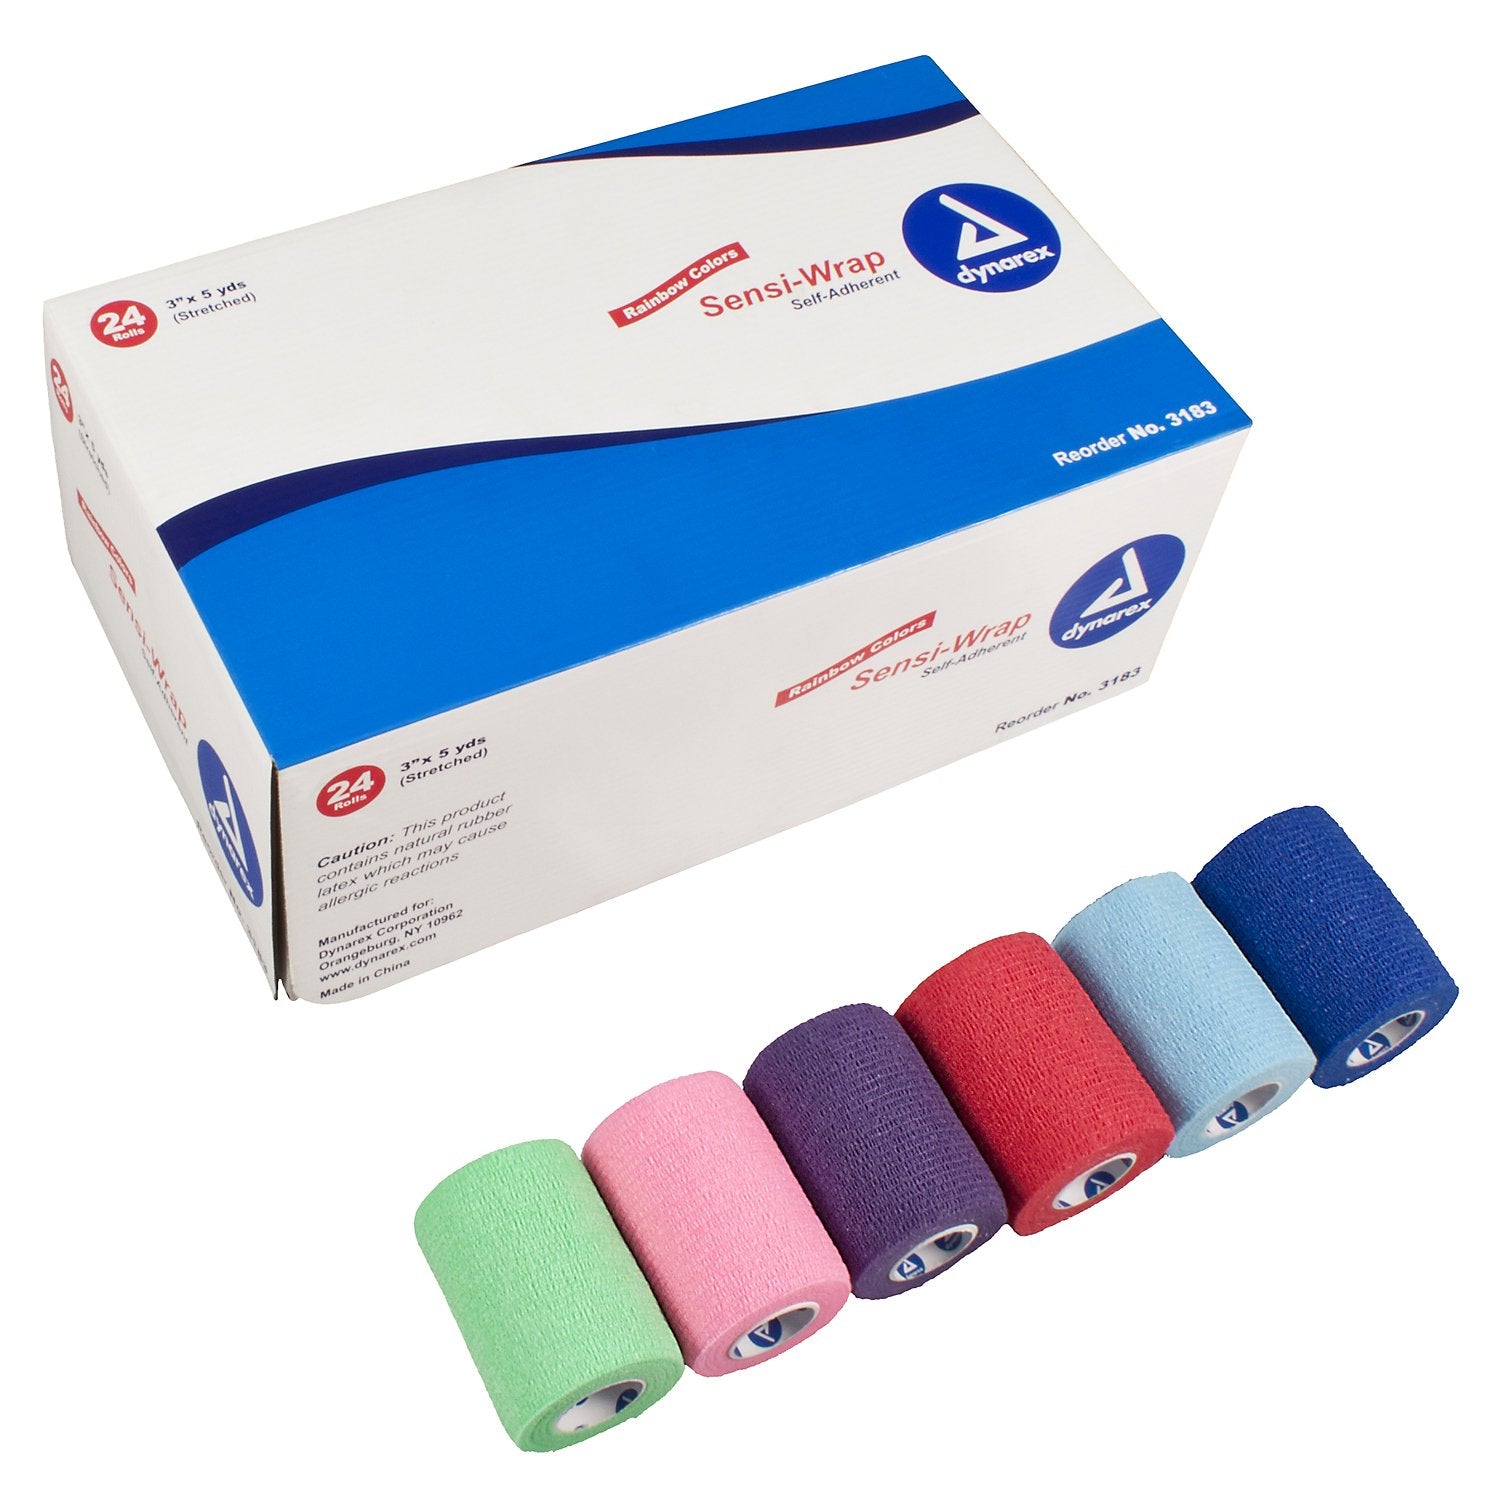 Cohesive Bandage Sensi-Wrap 3 Inch X 5 Yard Self-Adherent Closure Red / Green / Purple / Dark Blue / Pink / Light Blue NonSterile Standard Compression